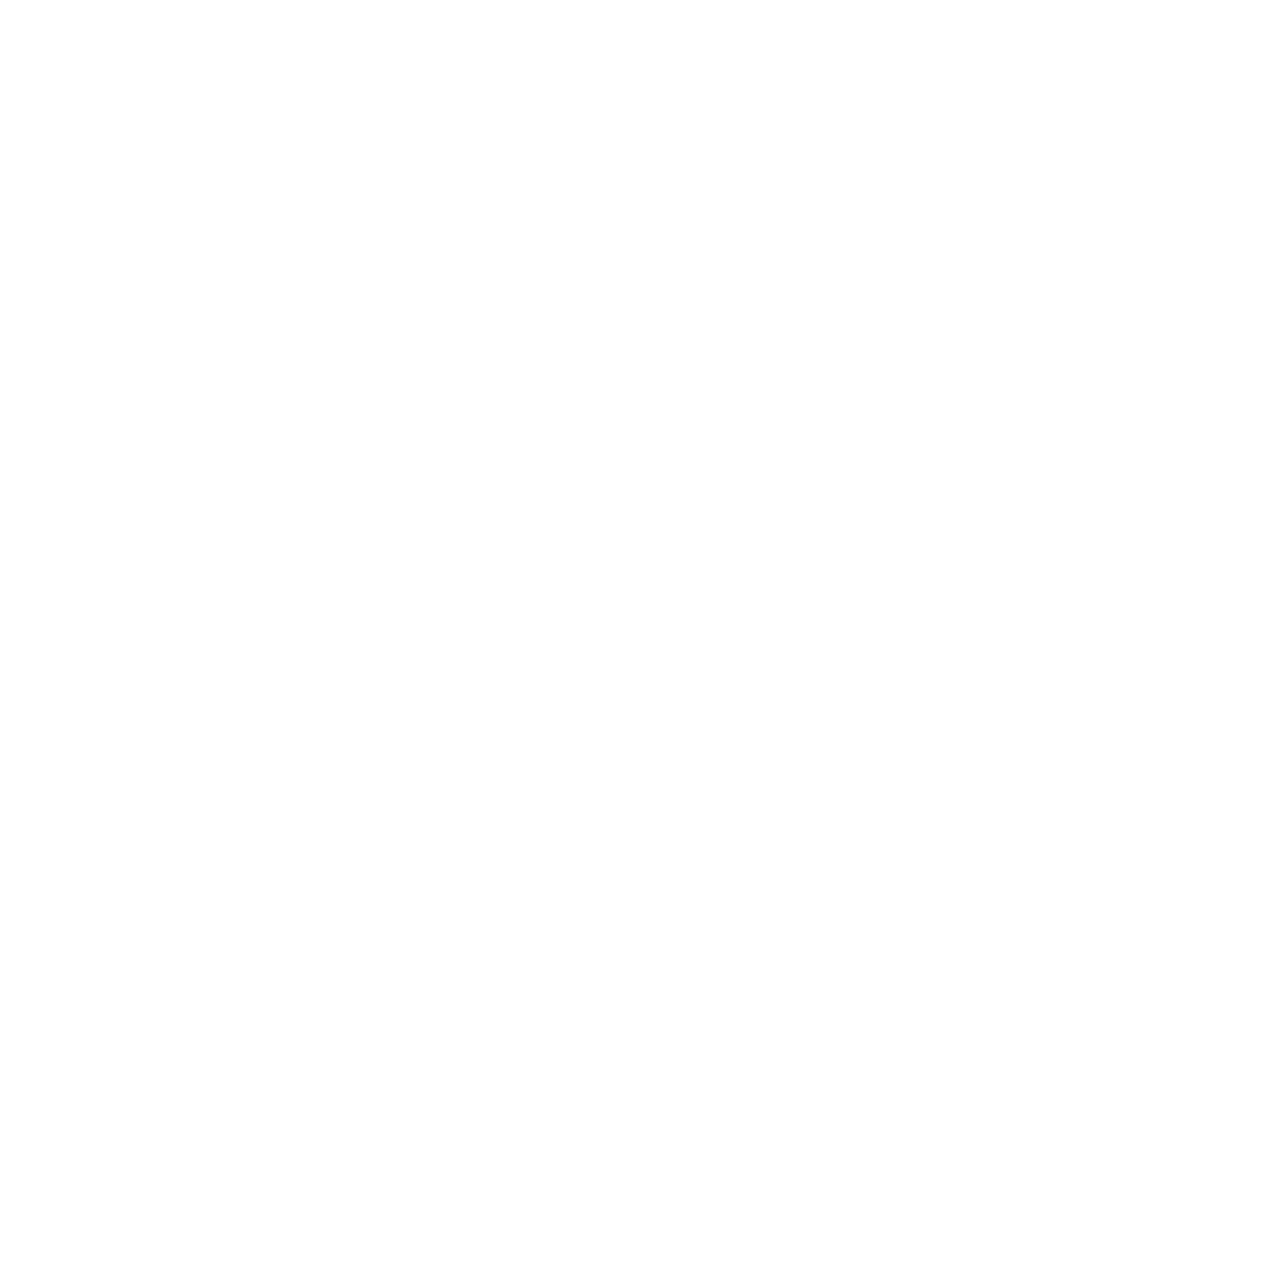 Laid Back Charter